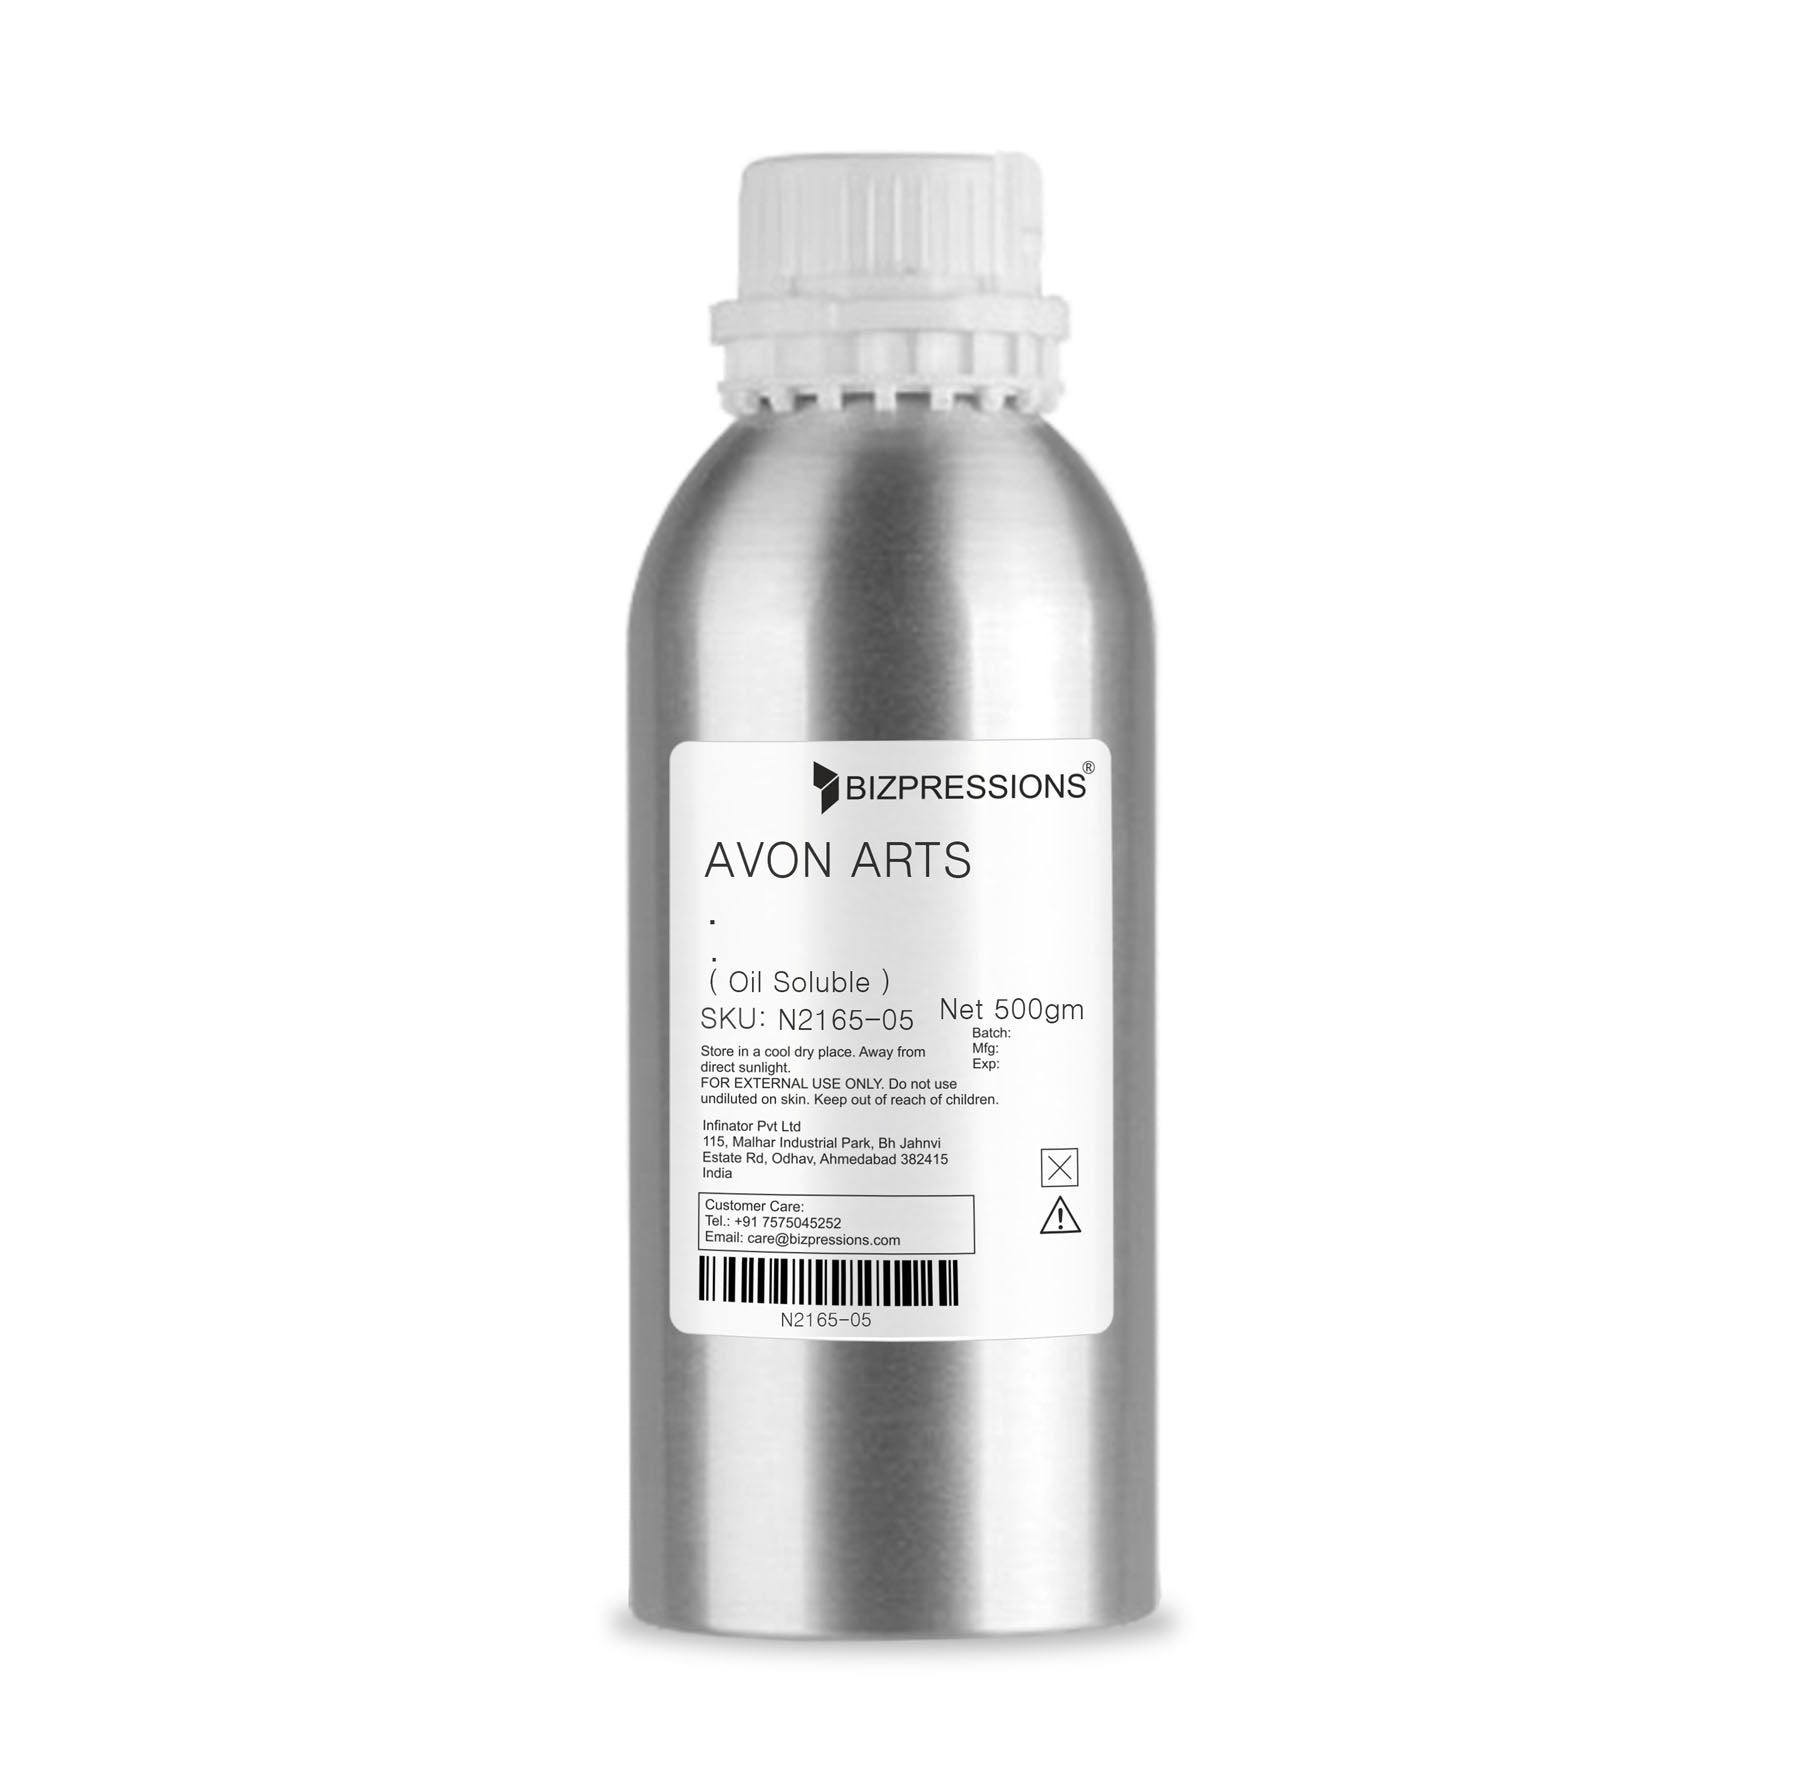 AVON ARTS - Fragrance ( Oil Soluble ) - 500 gm